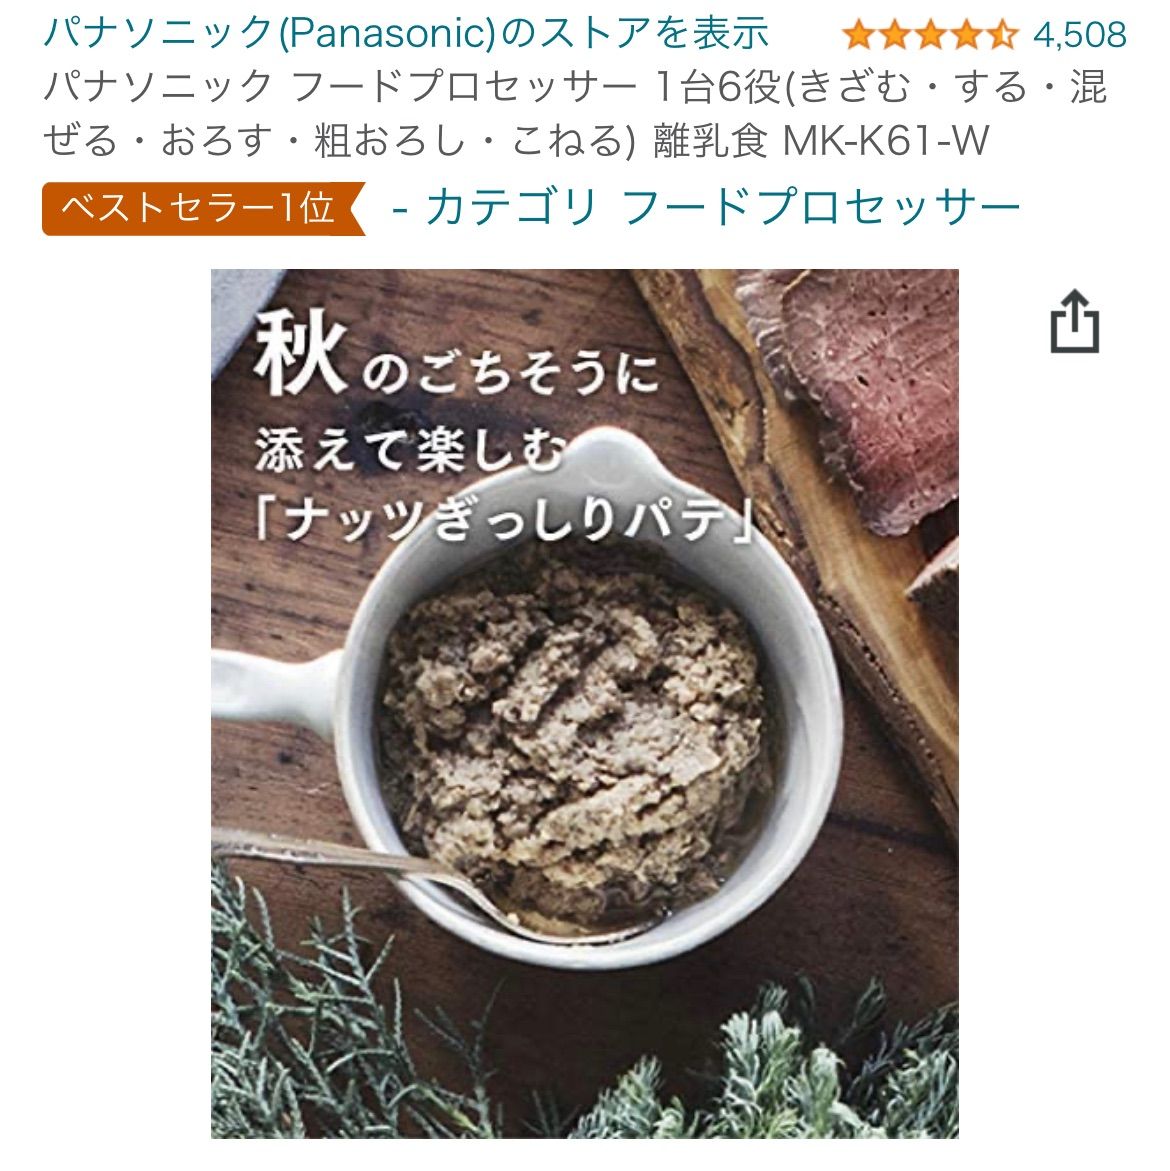 Panasonic フードプロセッサーmk-k61-w☆新品未開封☆ - Y.S SHOP